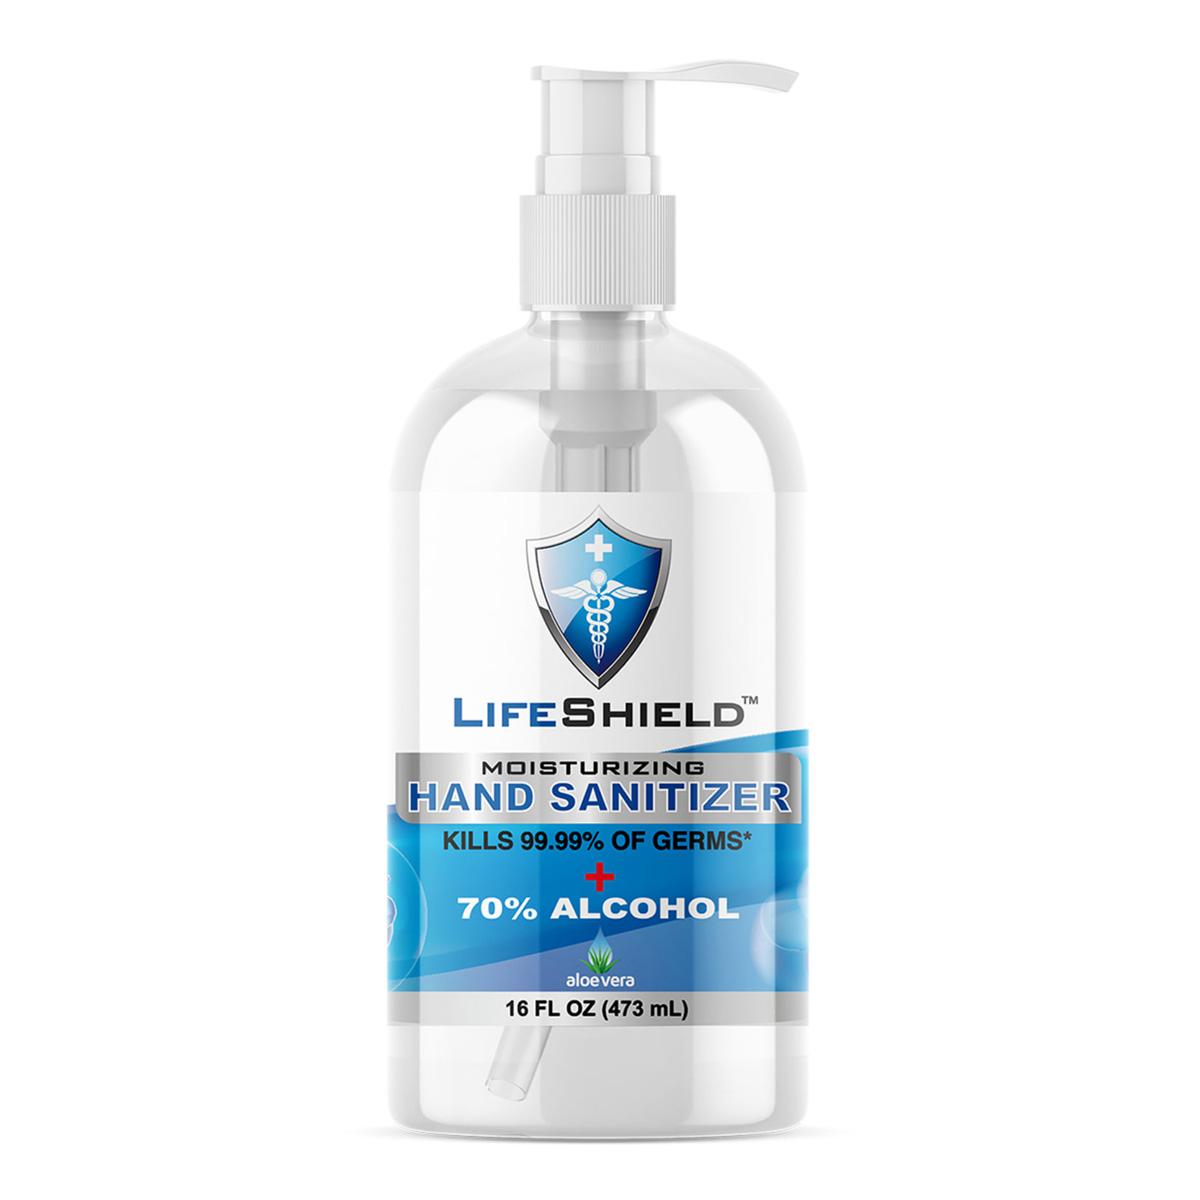 LifeShield Moisturizing Hand Sanitizer for $0.10